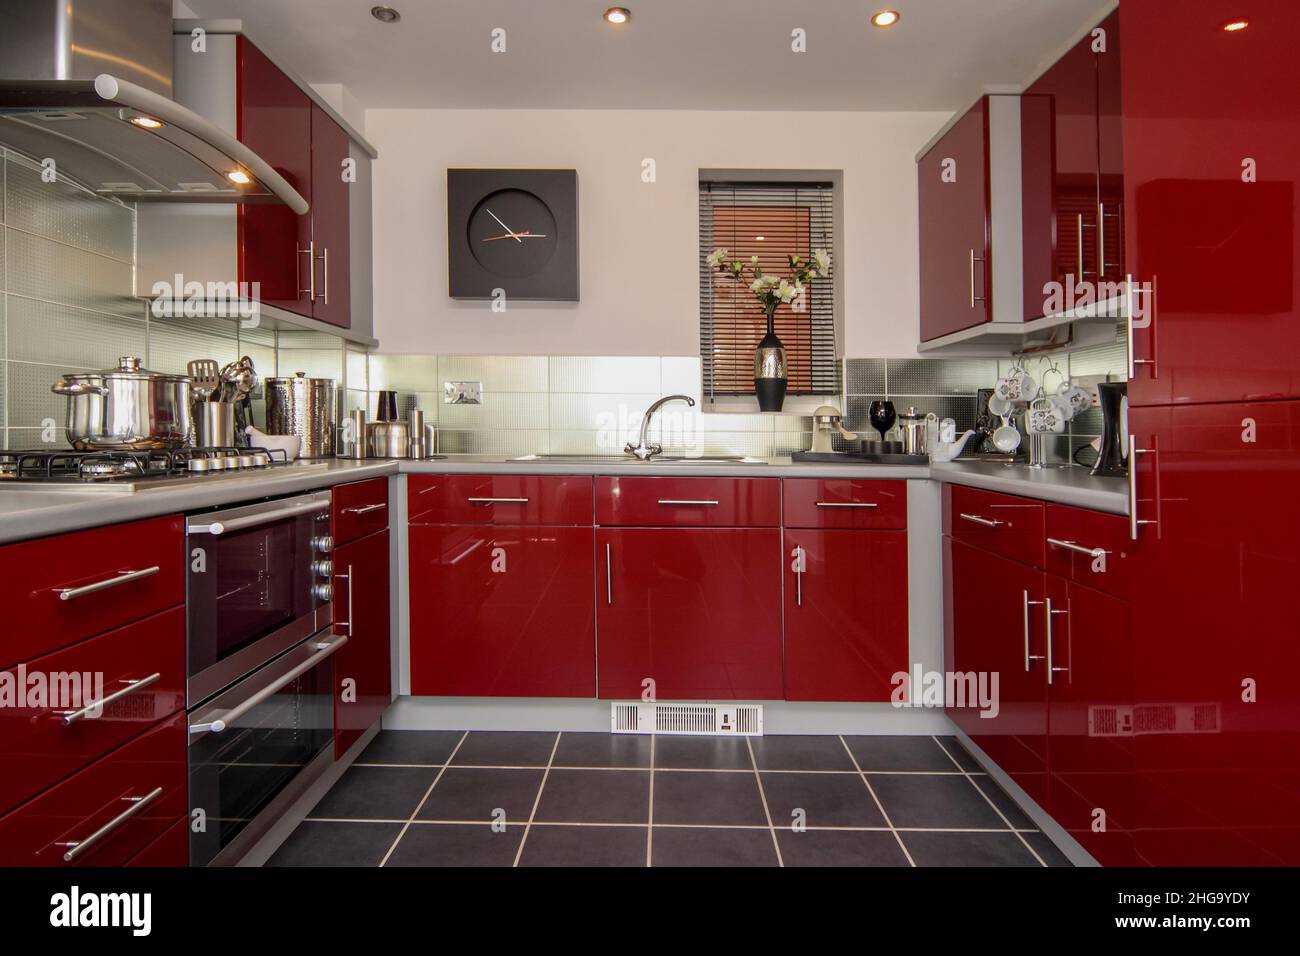 Cocina moderna, unidades de alto brillo rojo oscuro, reloj de pared, suelo de baldosa, acero inoxidable Foto de stock